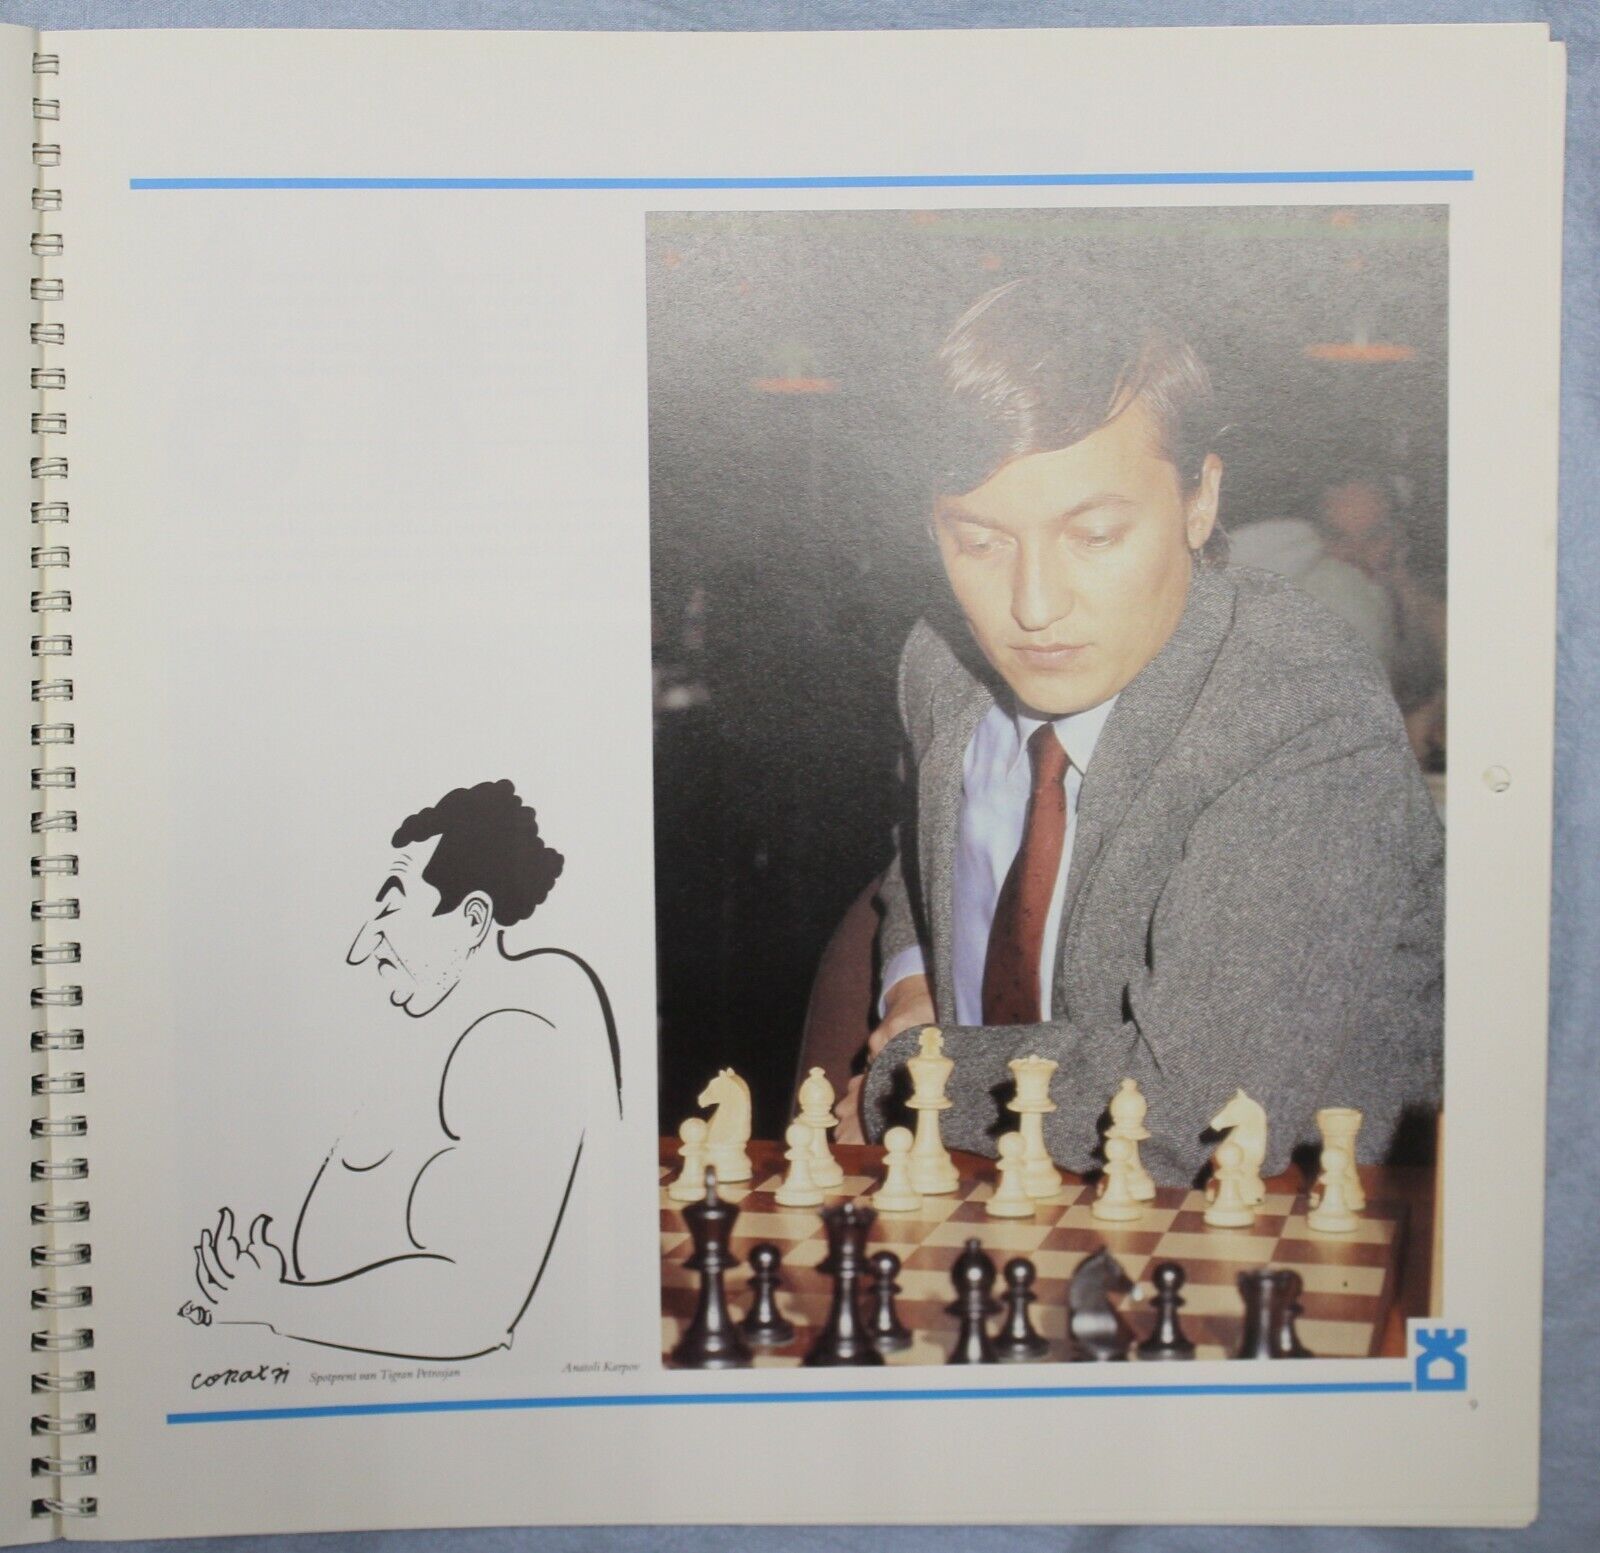 11079.Chess Book: Huge Format, Photo&Calendar 50 Jaar Hoogovens Schaaktoernooi 1988